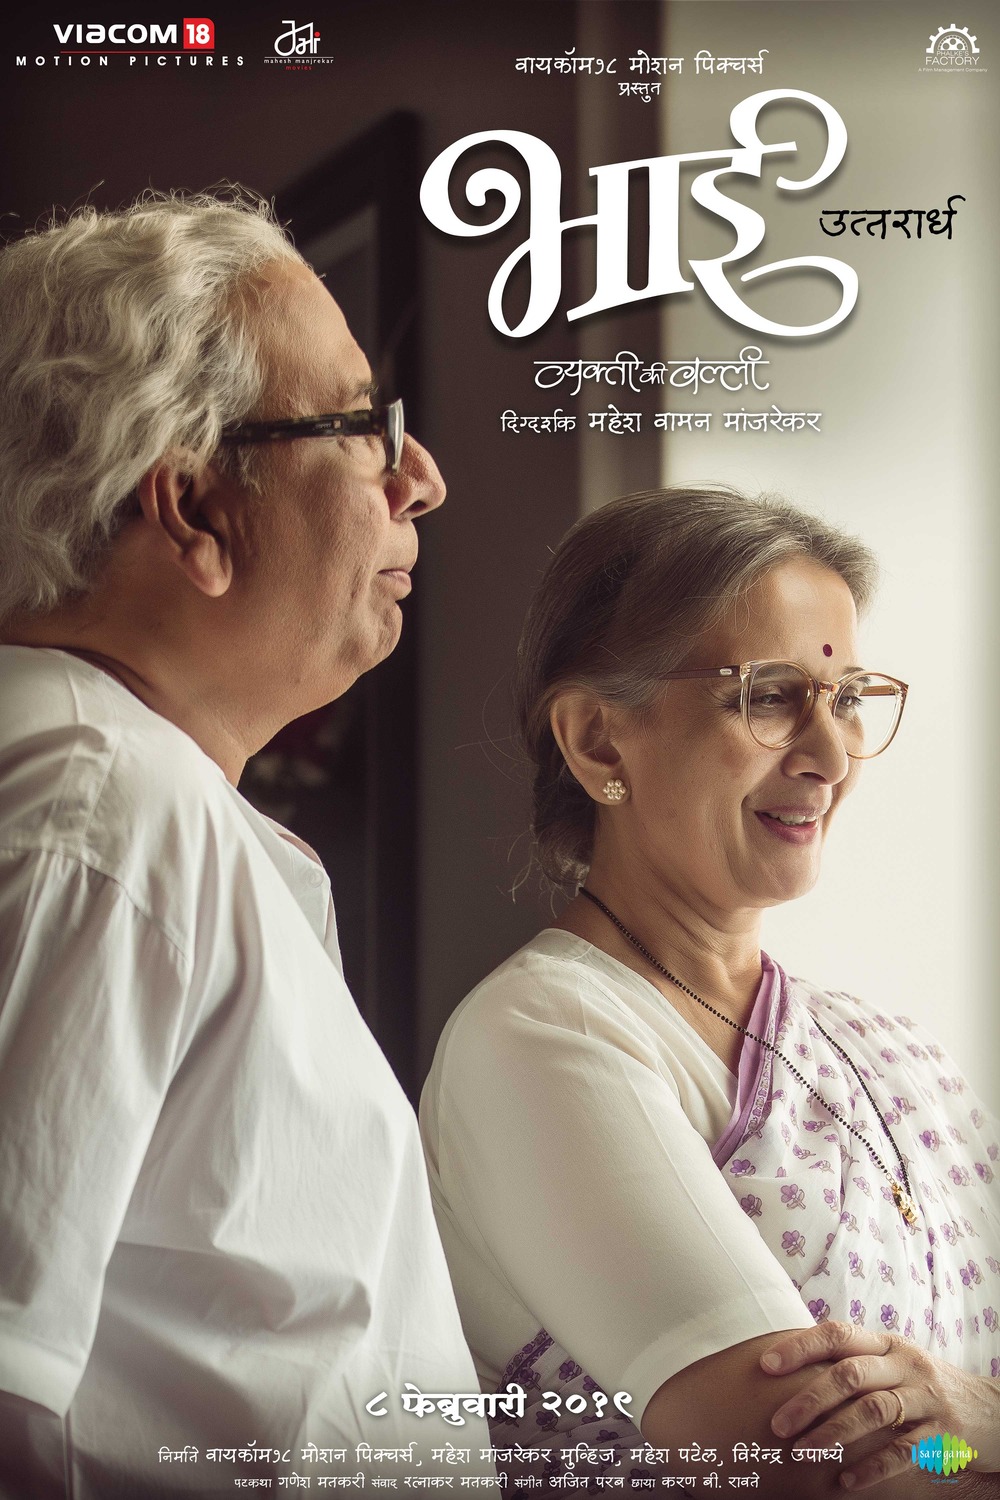 Extra Large Movie Poster Image for Bhai - Vyakti Ki Valli (#4 of 6)